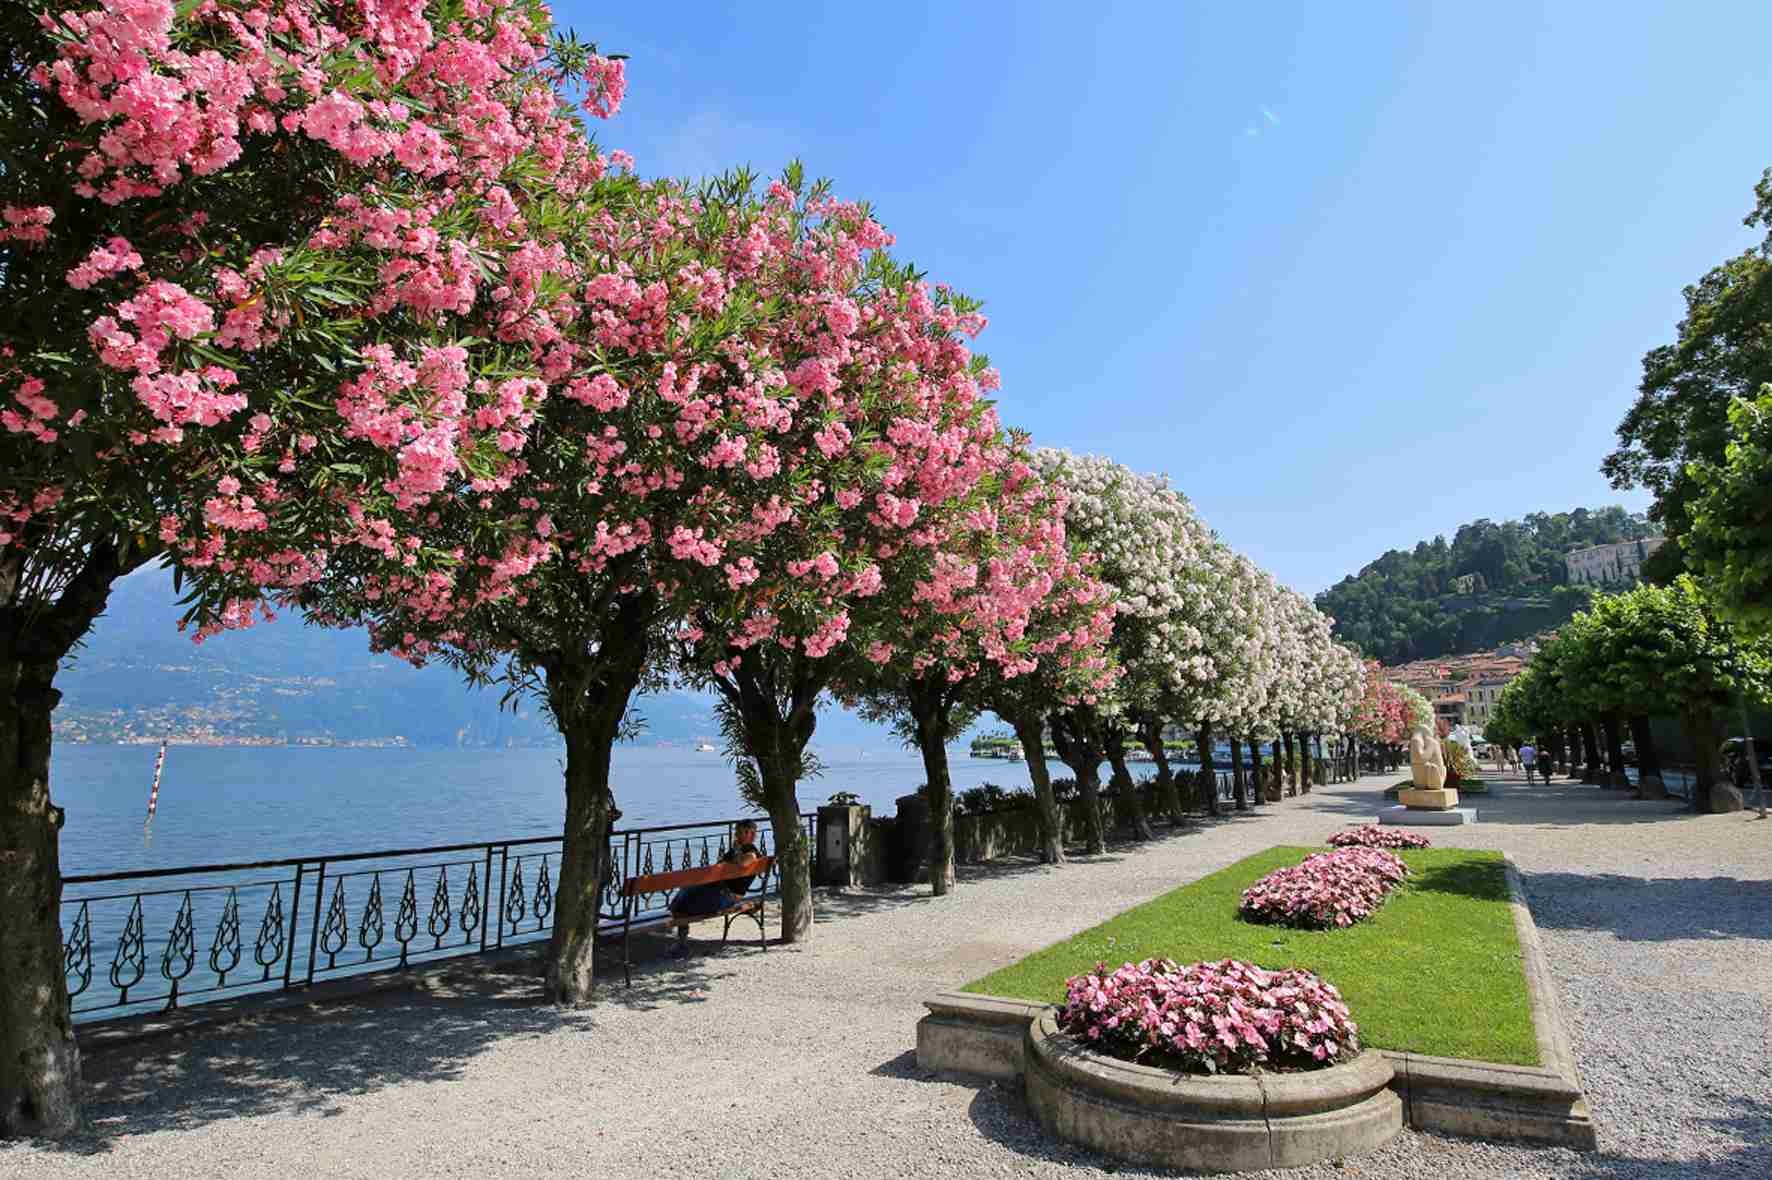 tourhub | The Natural Adventure | Walking at Lake Como 